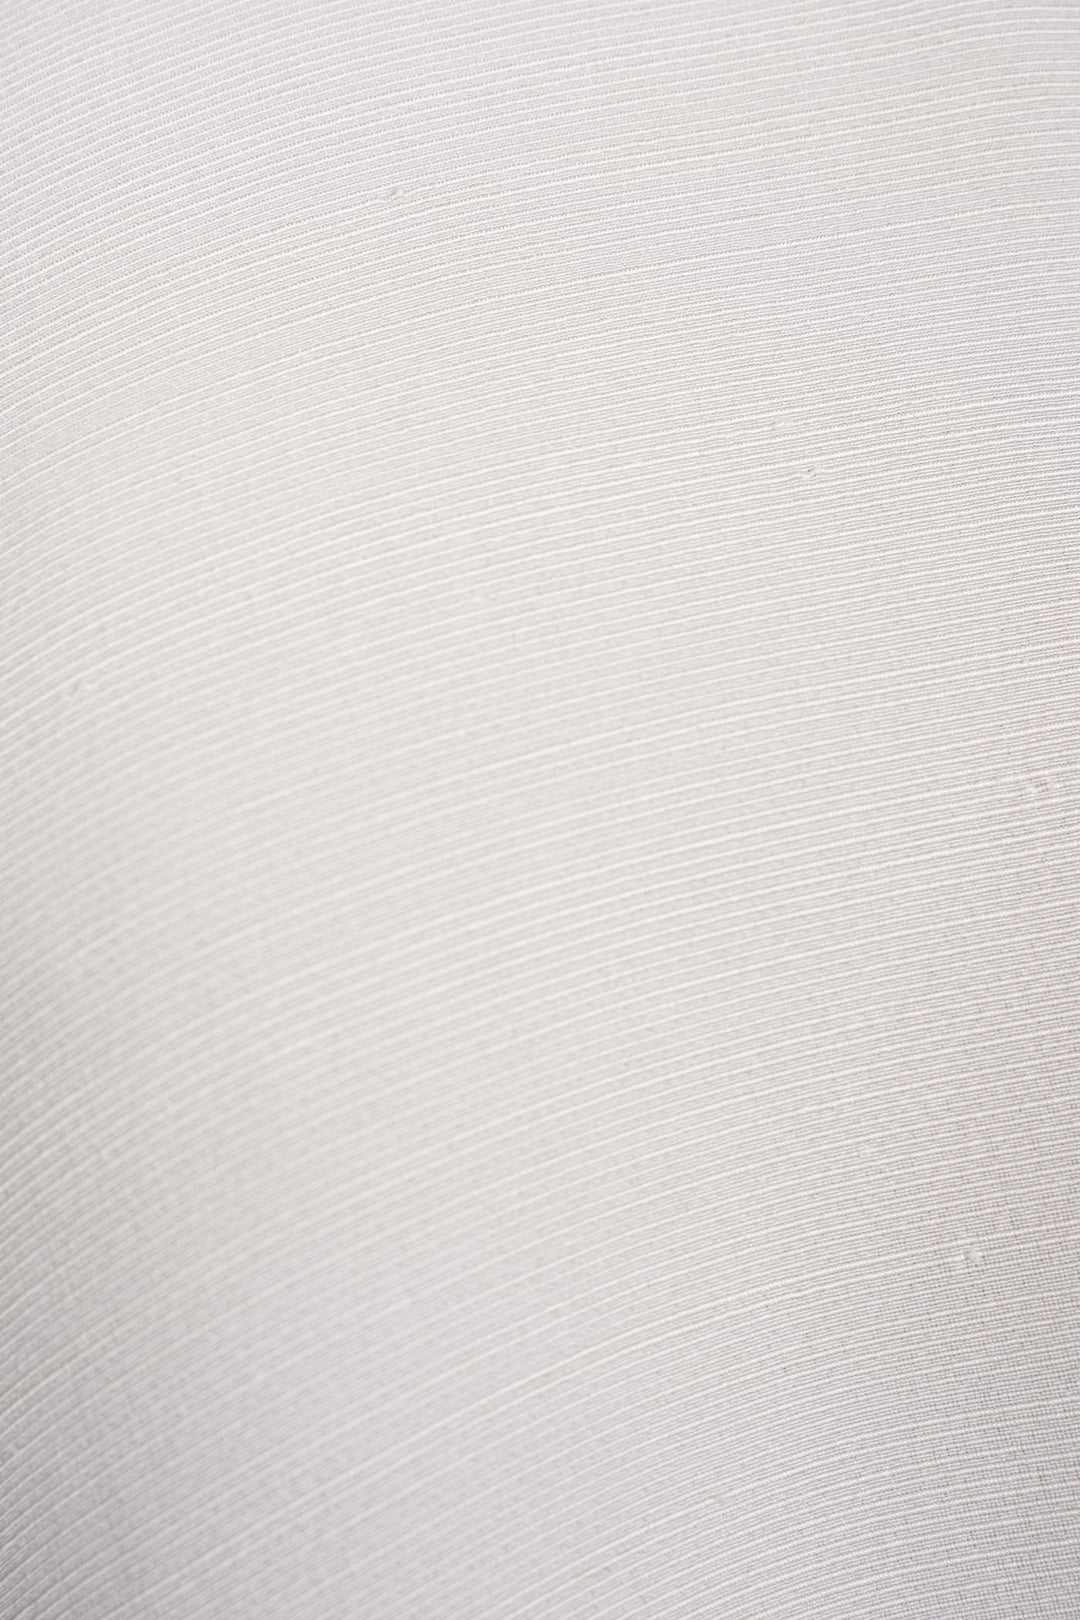 Black and White Asymmetrical Front A Shape Sleeveless Silk Jacket